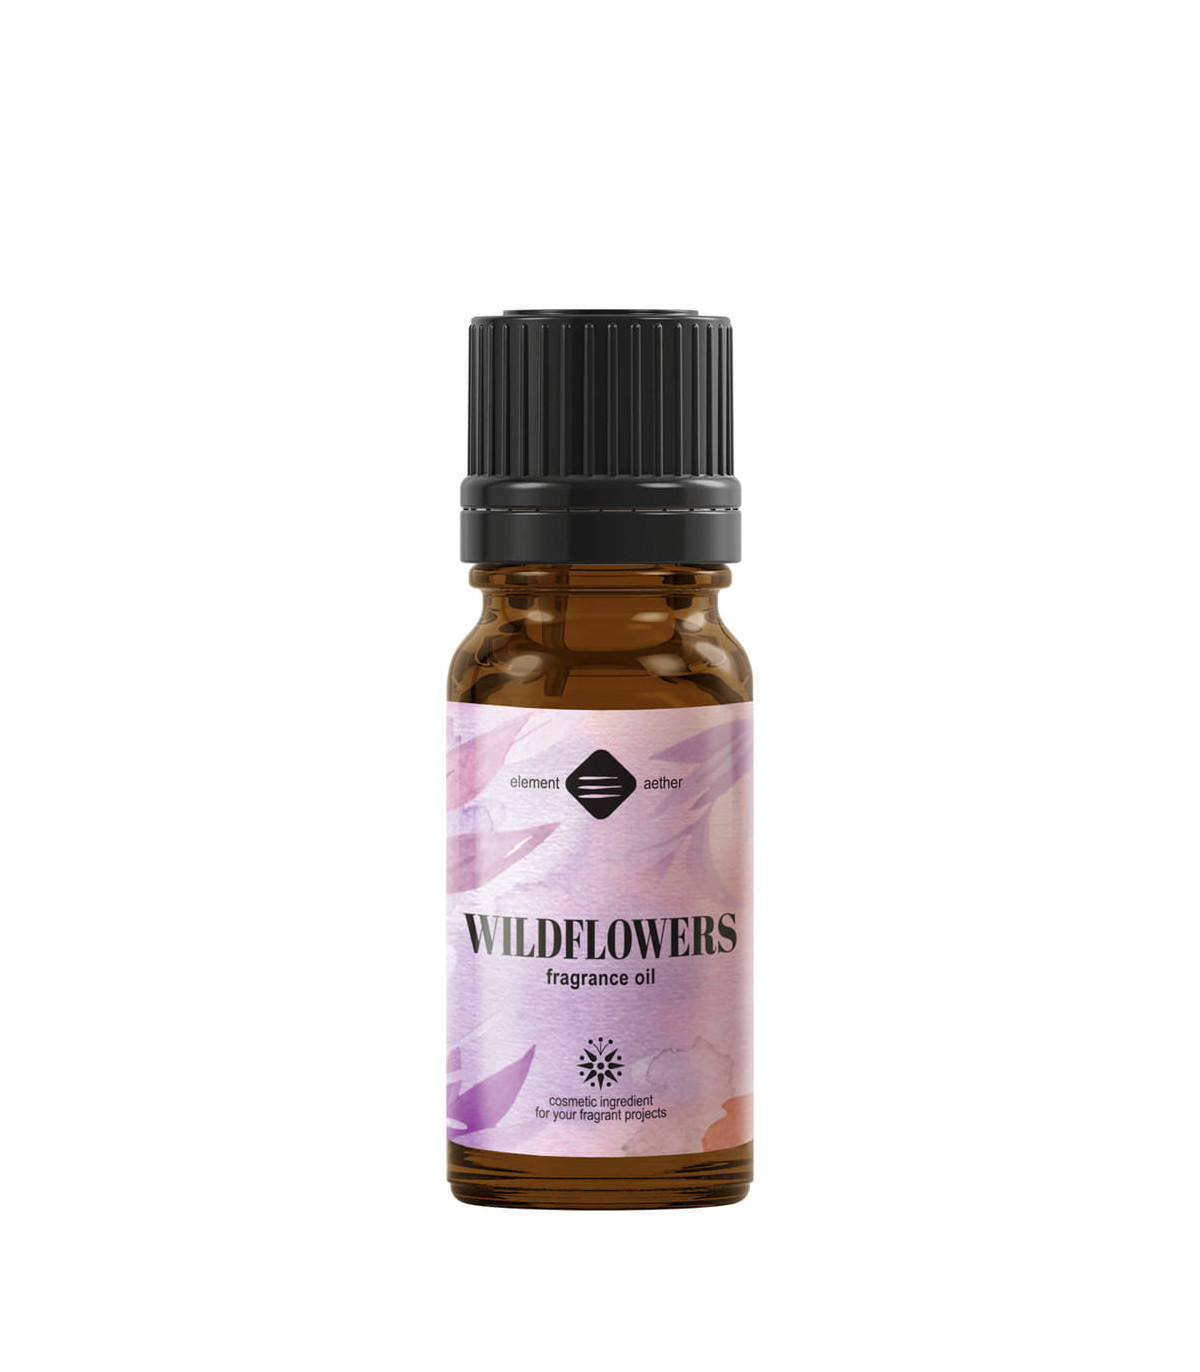 Wildflowers Fragrance oil